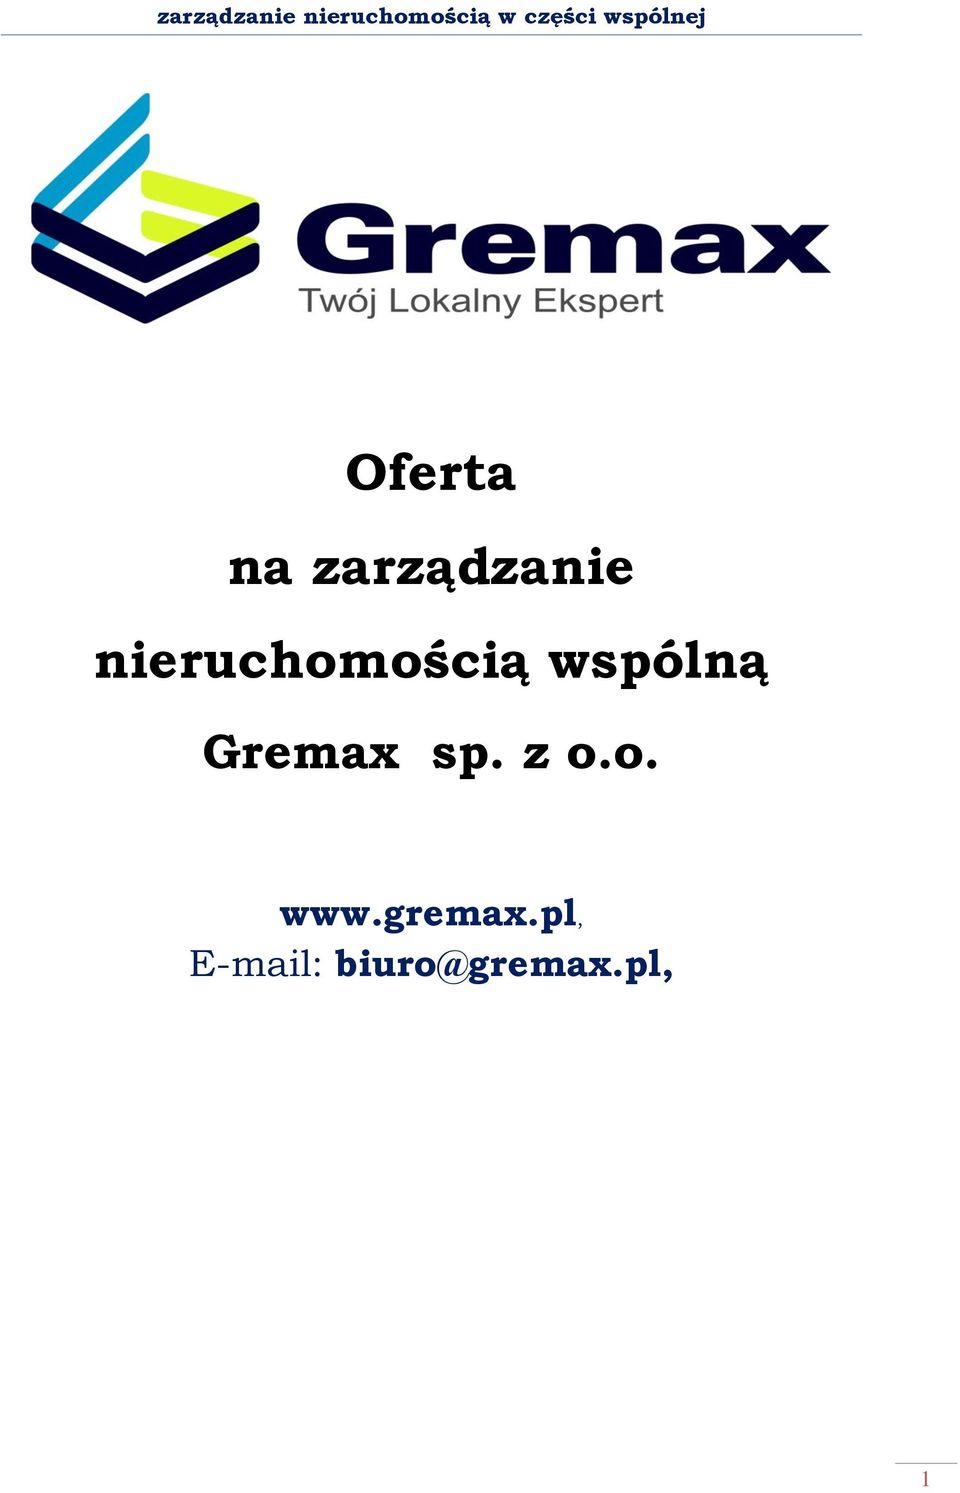 Gremax sp. z o.o. www.